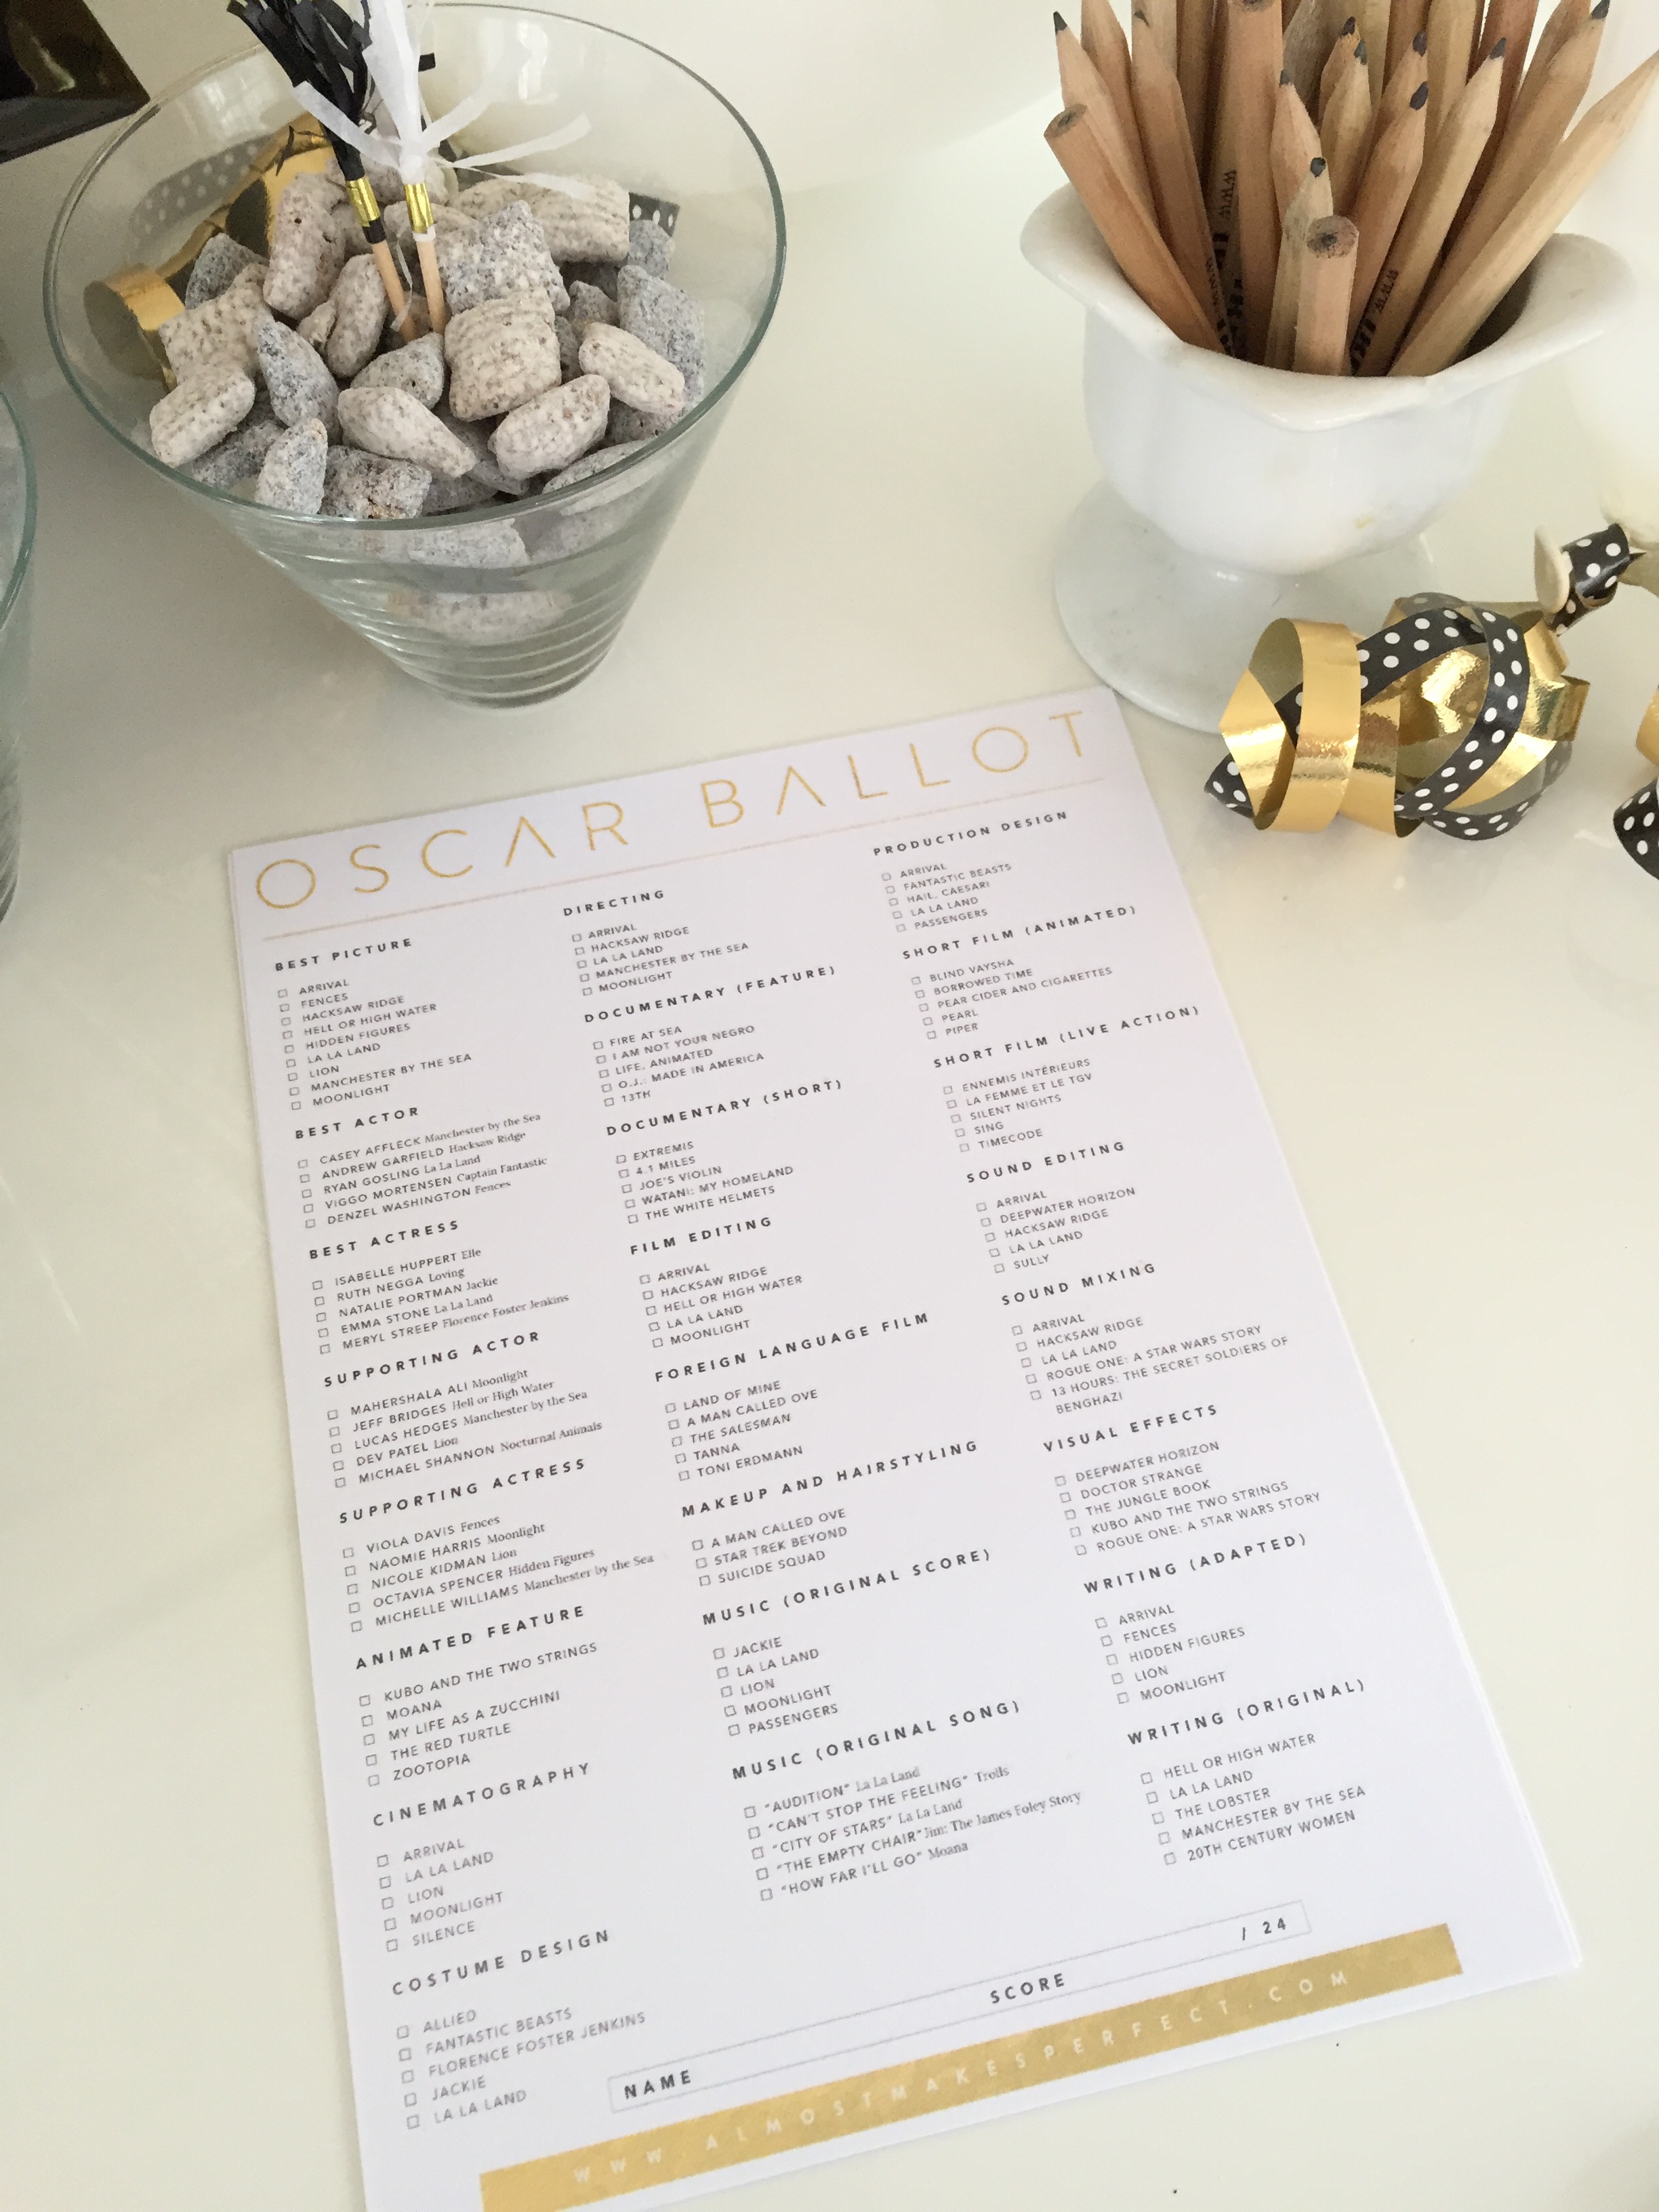 Oscars ballot